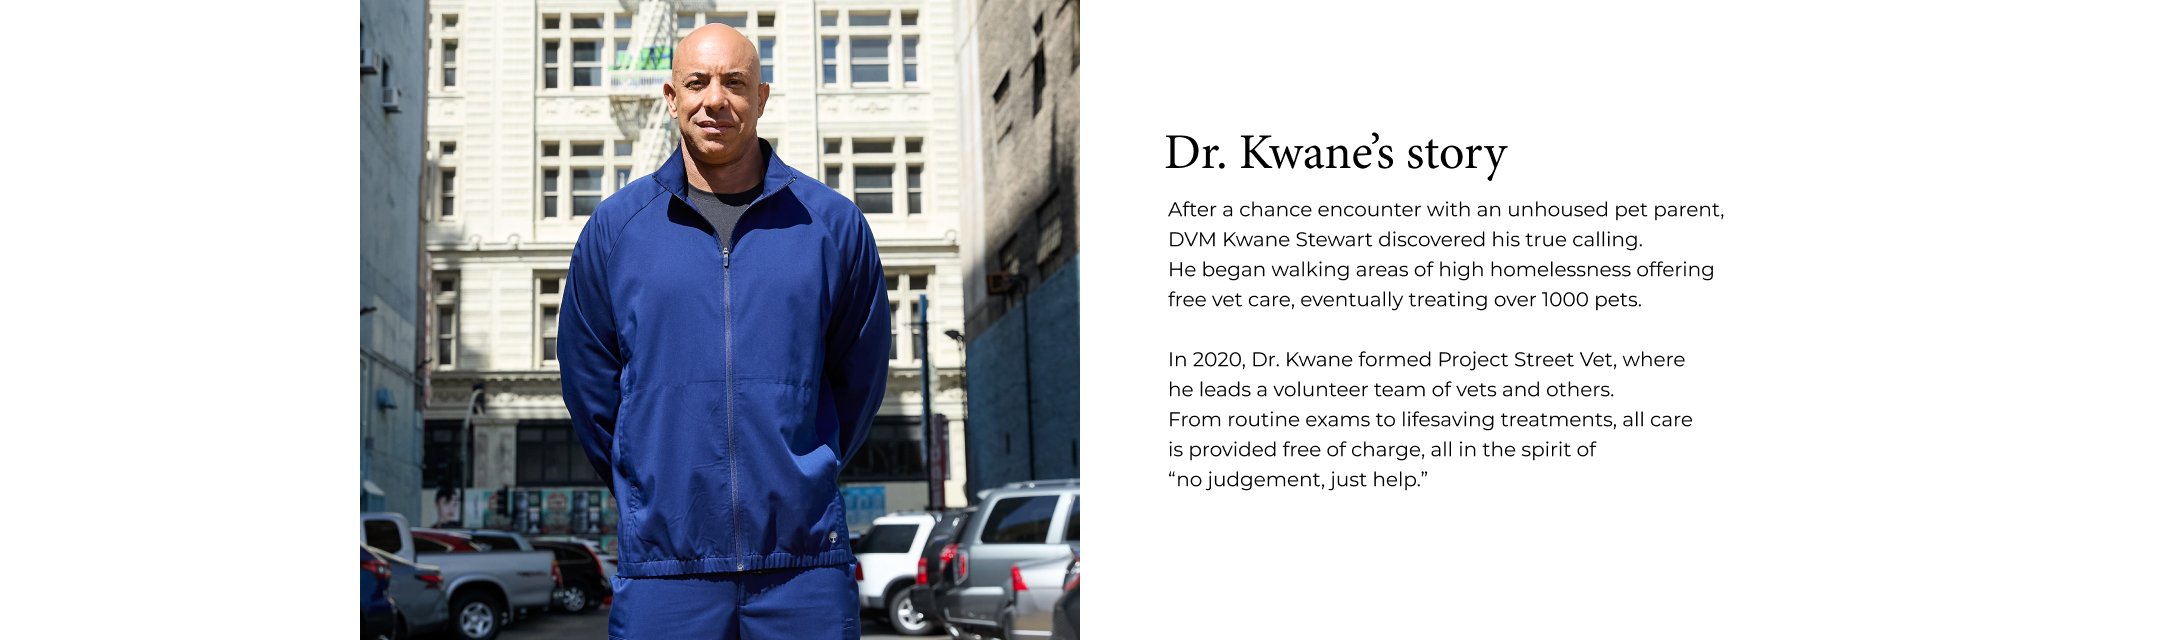 dr. kwane's story